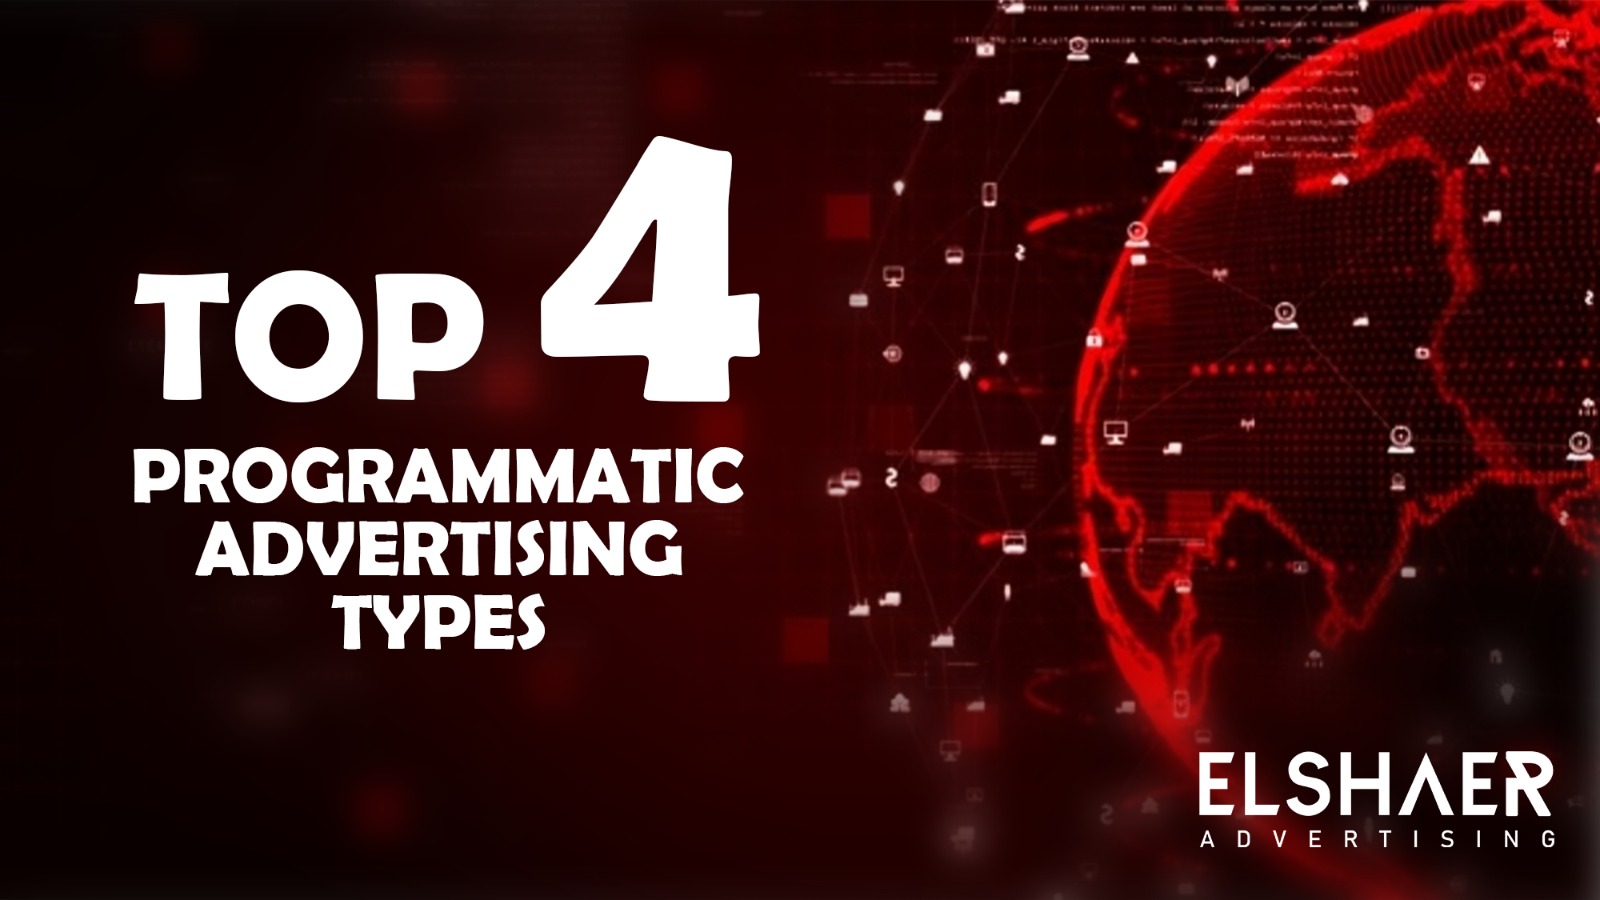 Top 4 Programmatic Advertising Types